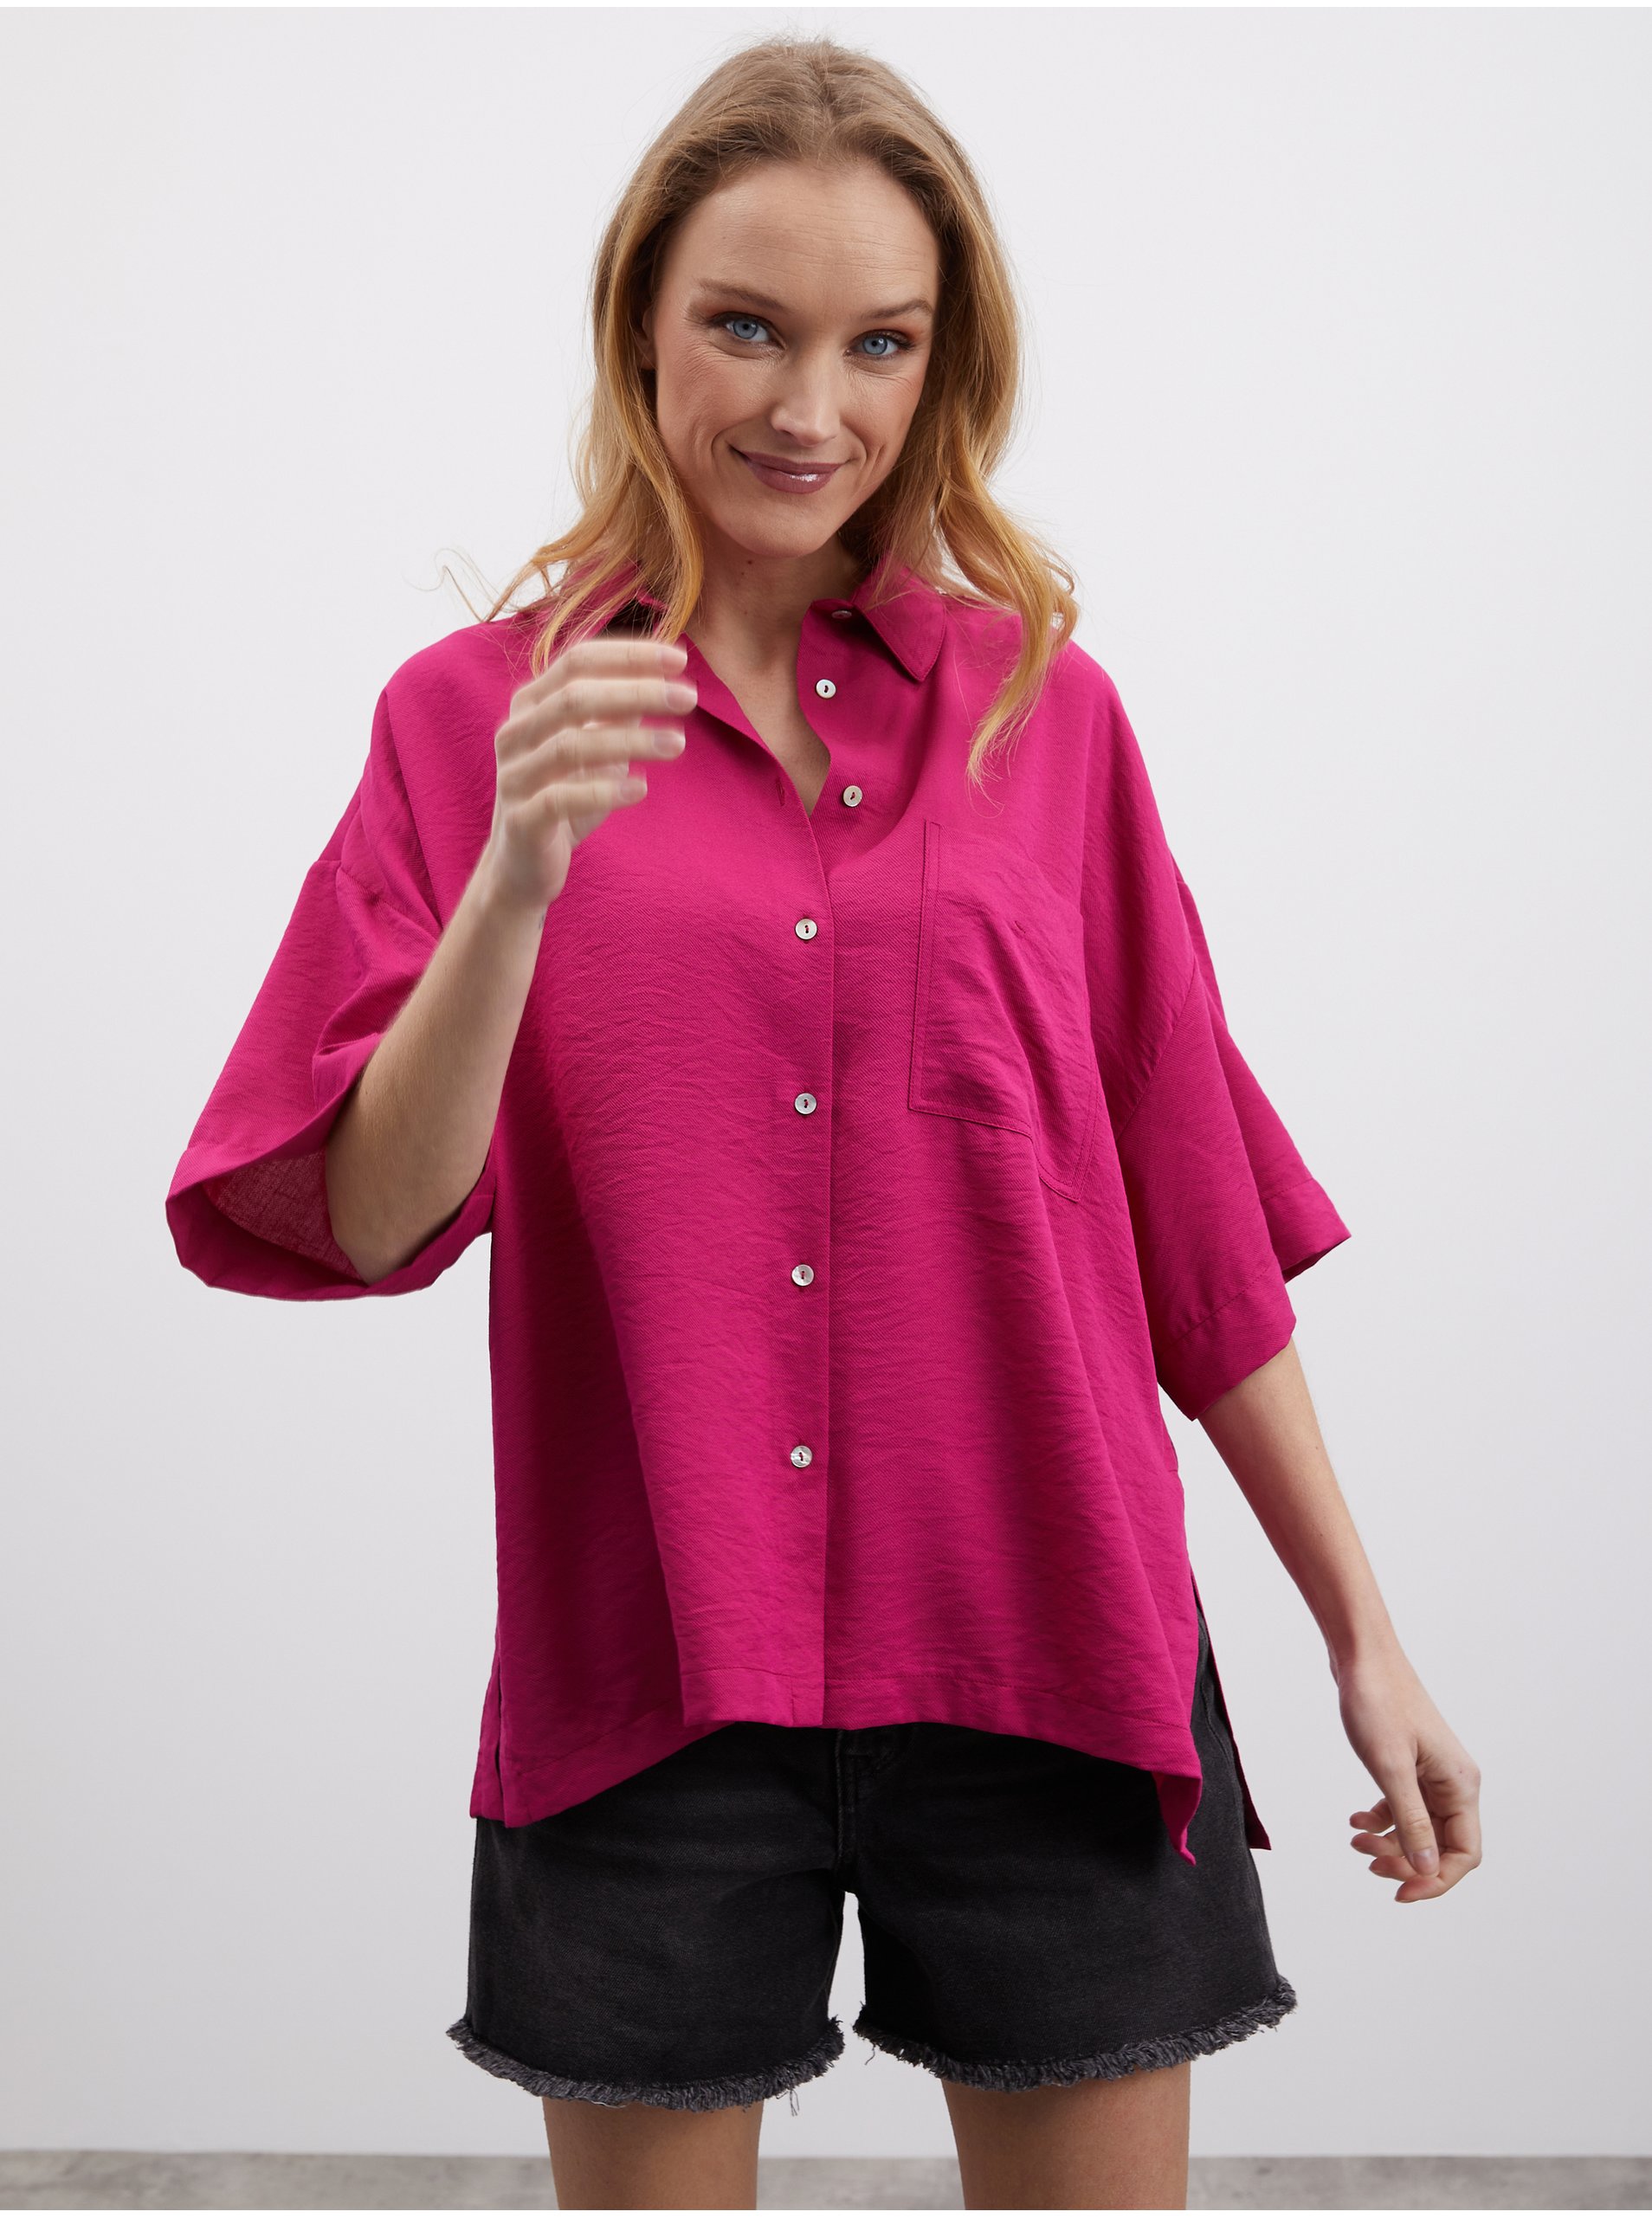 Lacno Tmavo ružová dámska oversize košeľa ZOOT.lab Rhiannon